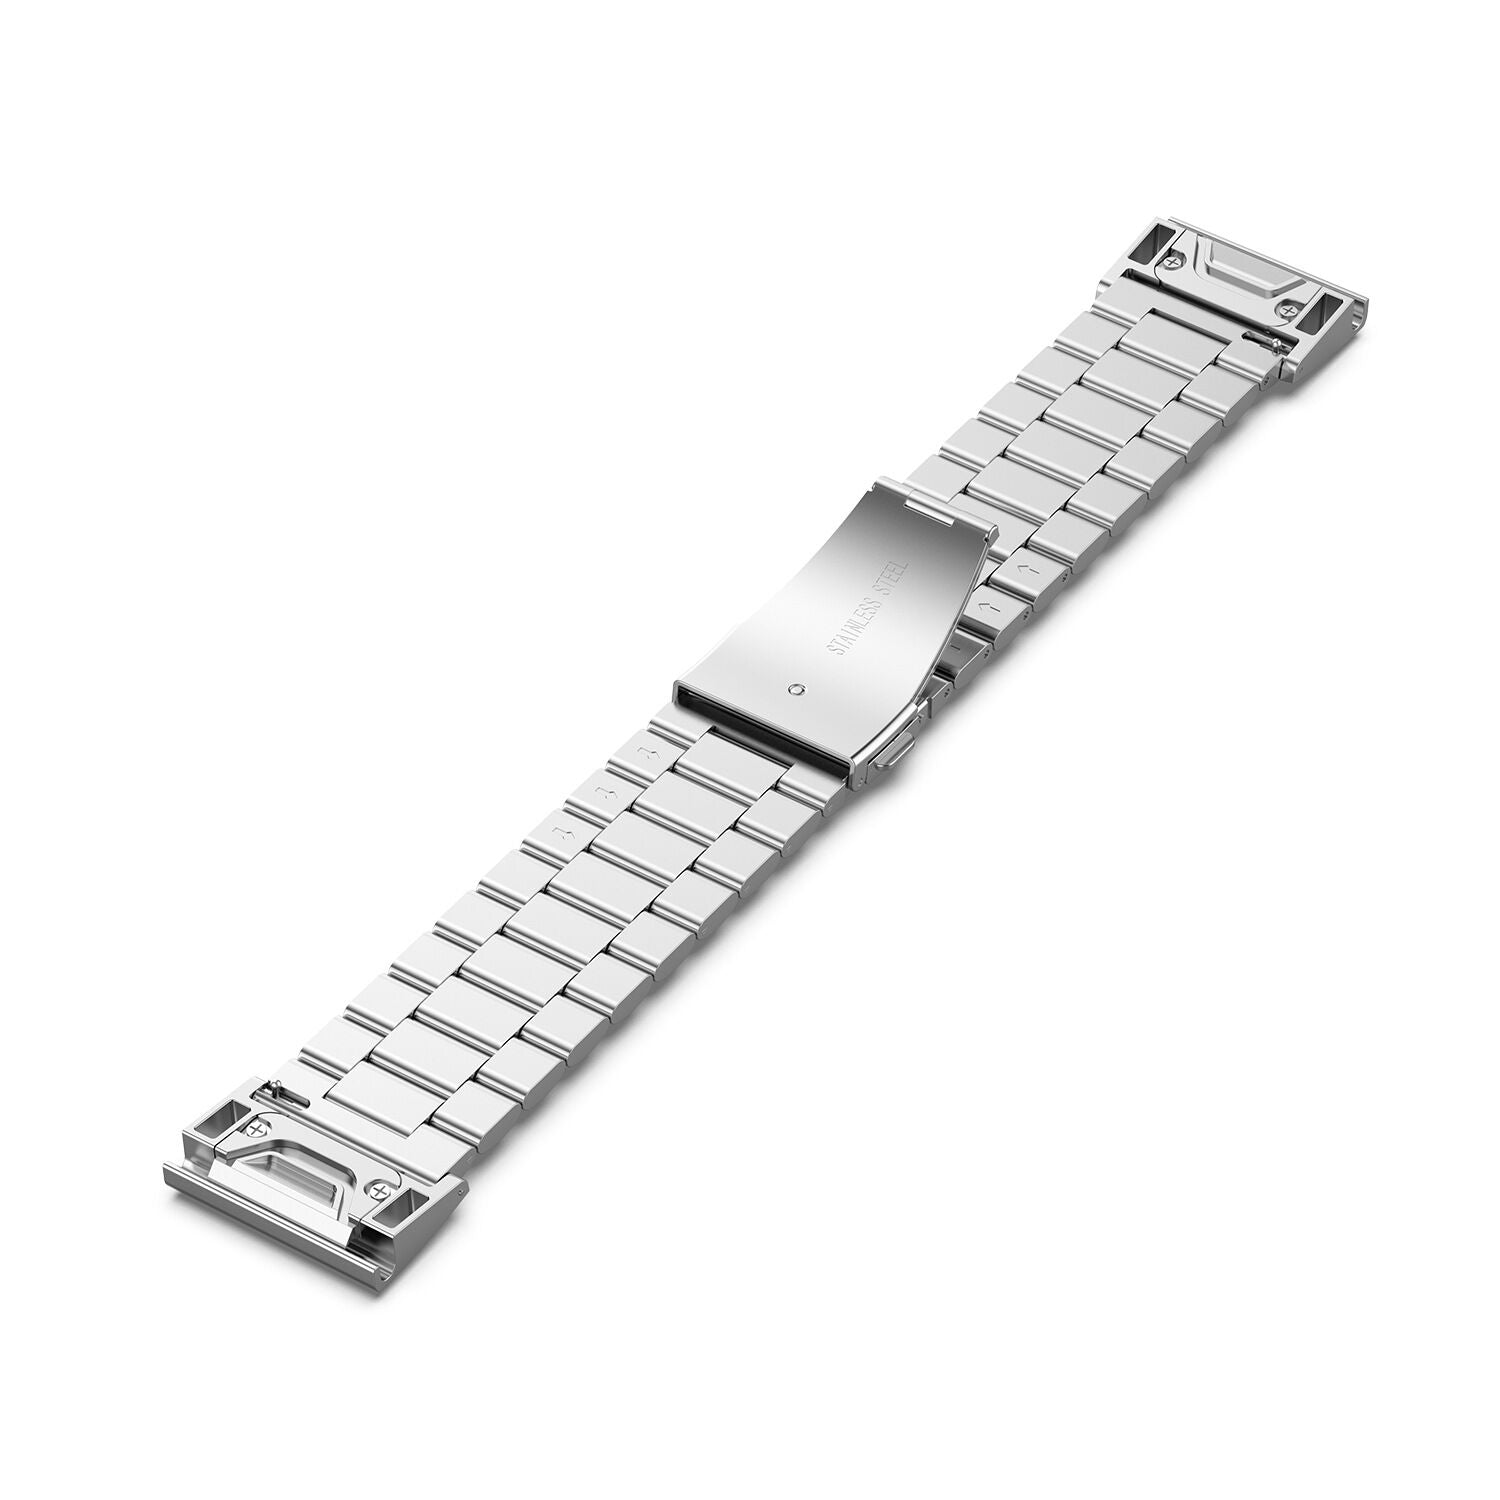 Stainless Steel Watch Strap for Garmin Fenix 5/5X/5S/Forerunner 945/Approach S60